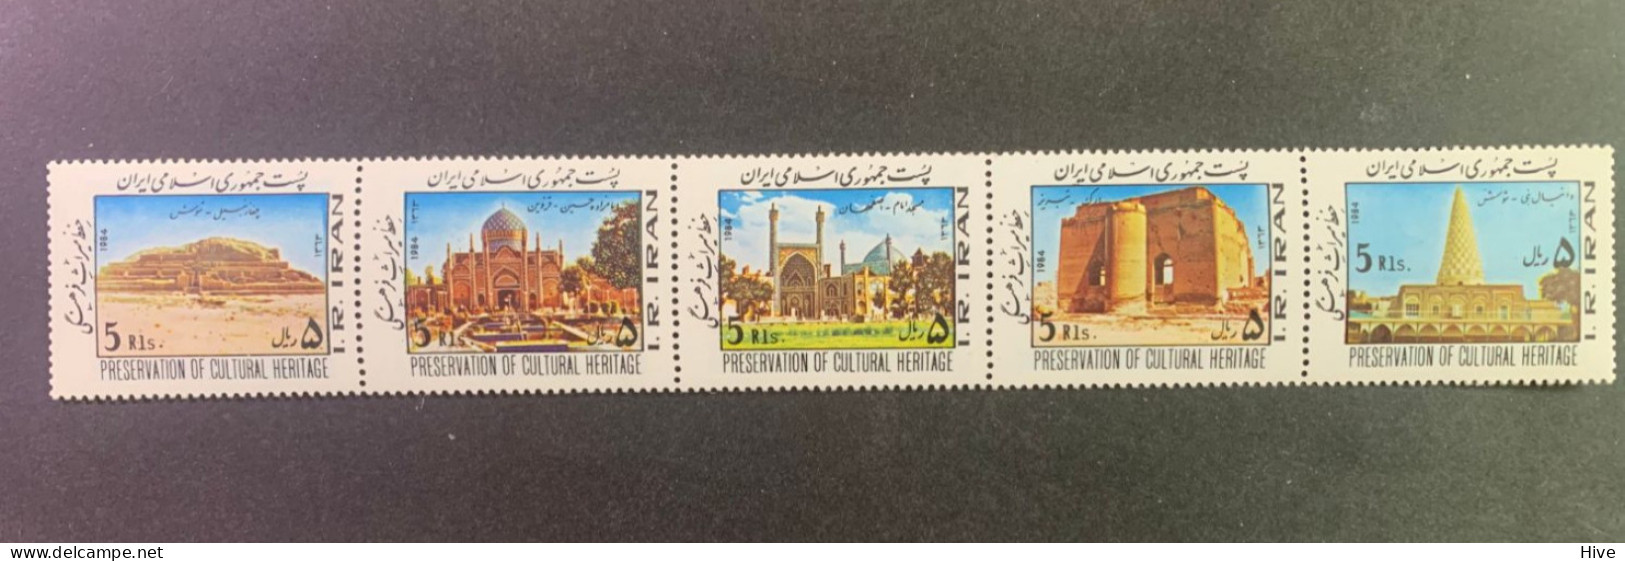 Iran - 1984 - Cultural Heritage, MNH - Iran